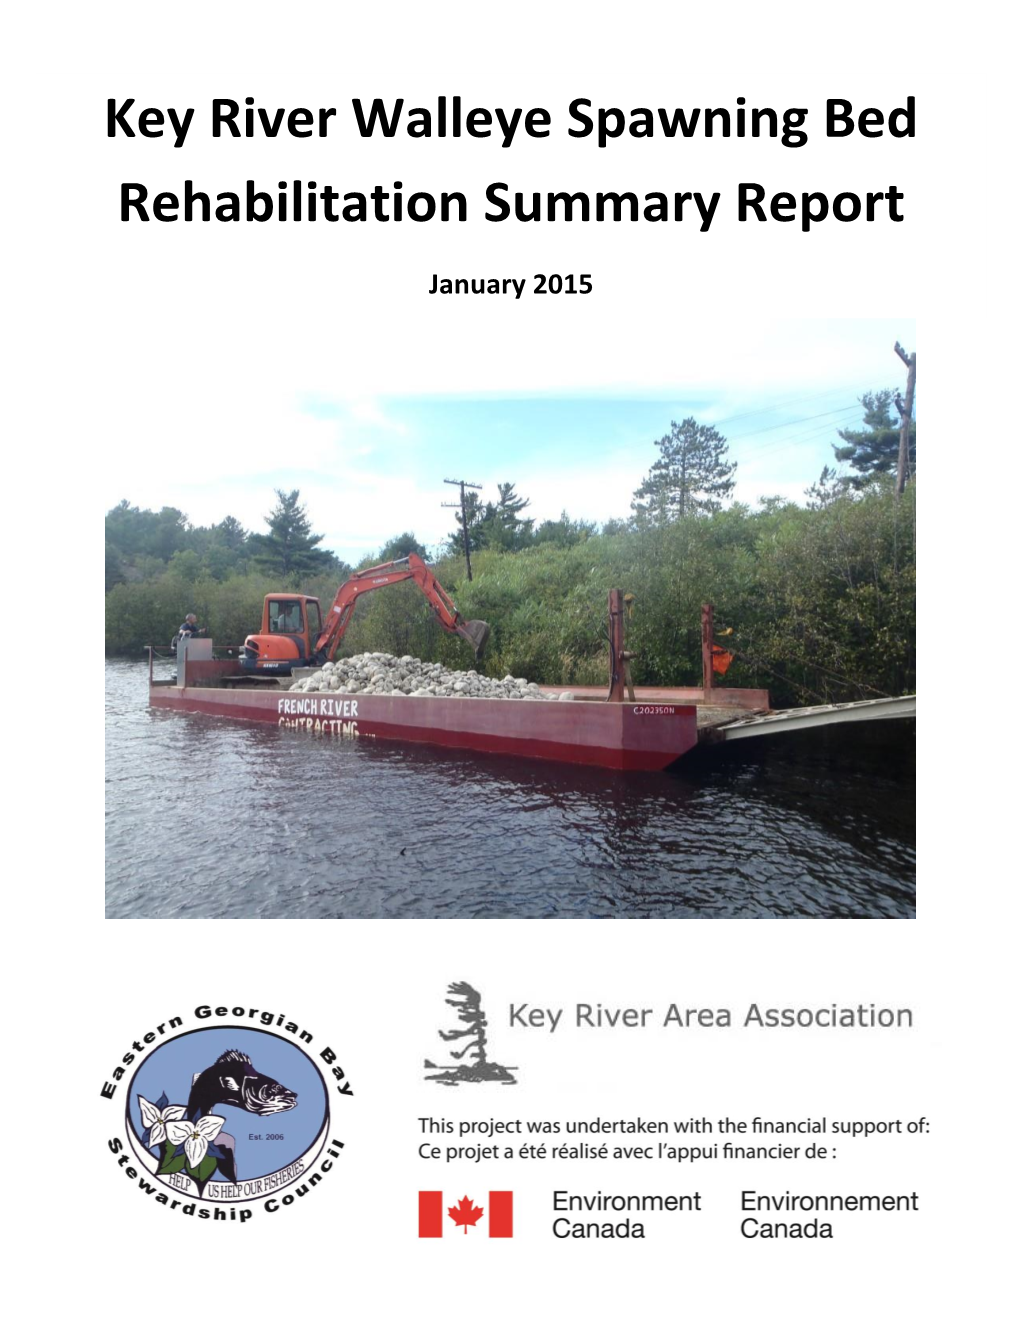 Key River Walleye Spawning Bed Rehabilitation Summary Report